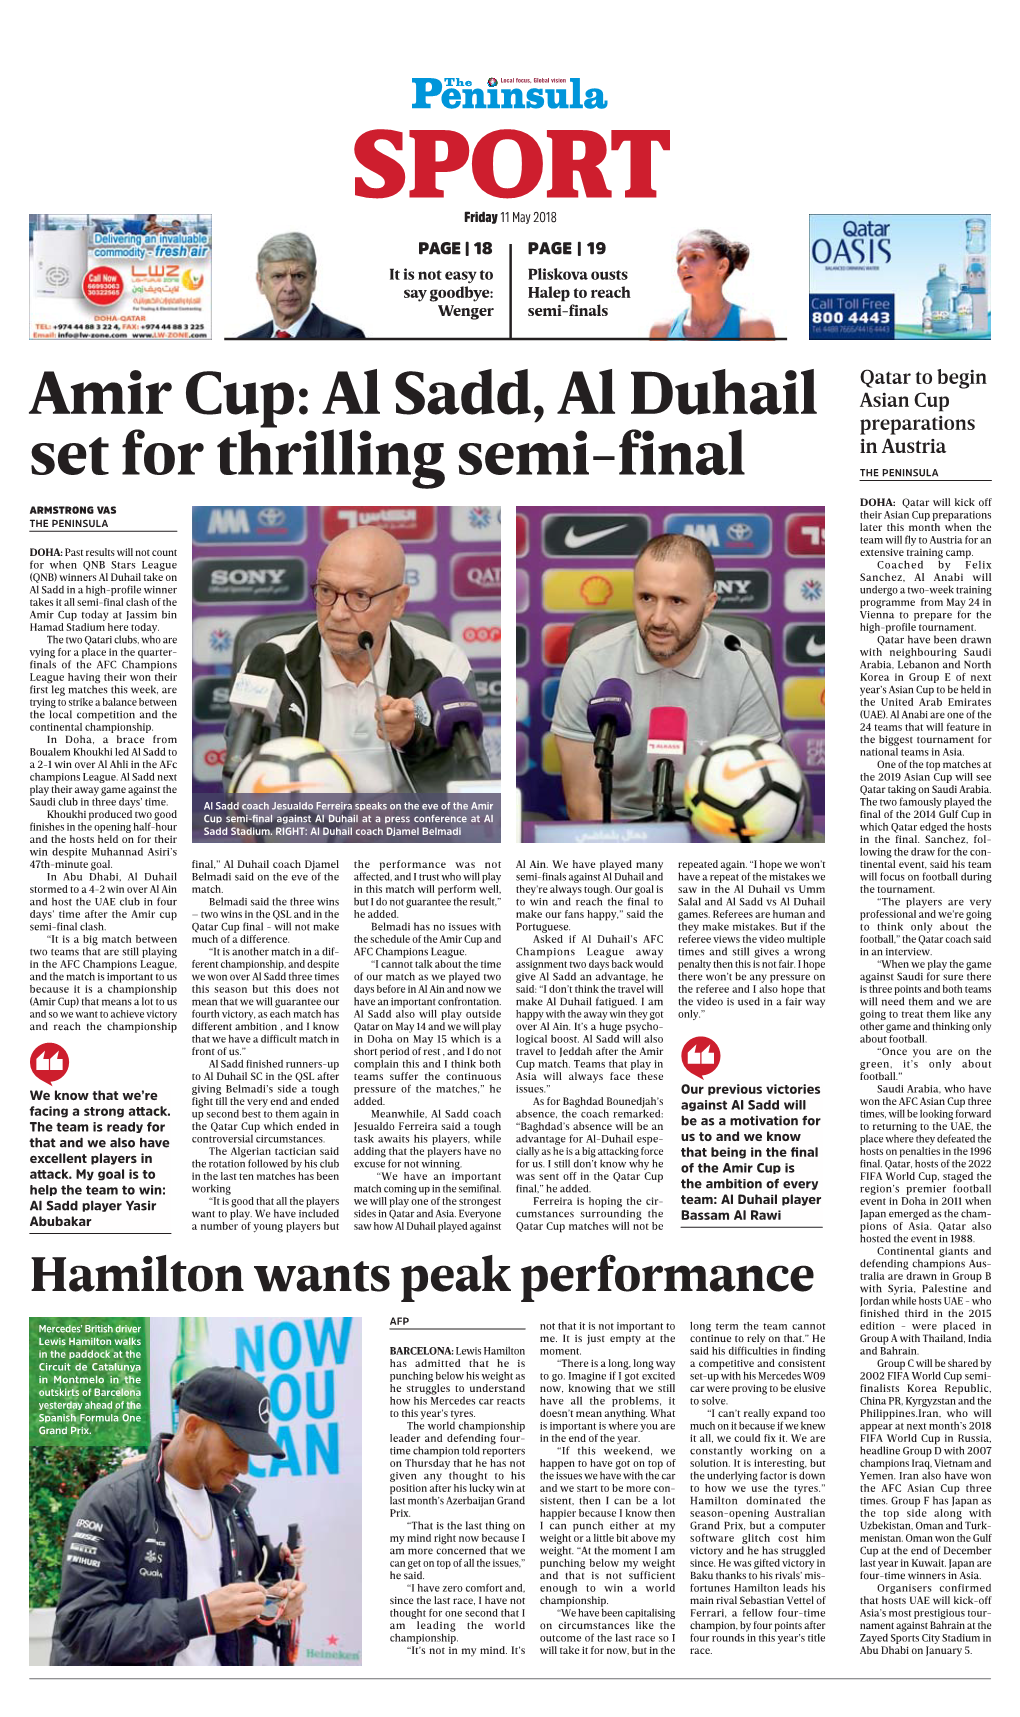 Al Sadd, Al Duhail Set for Thrilling Semi-Final